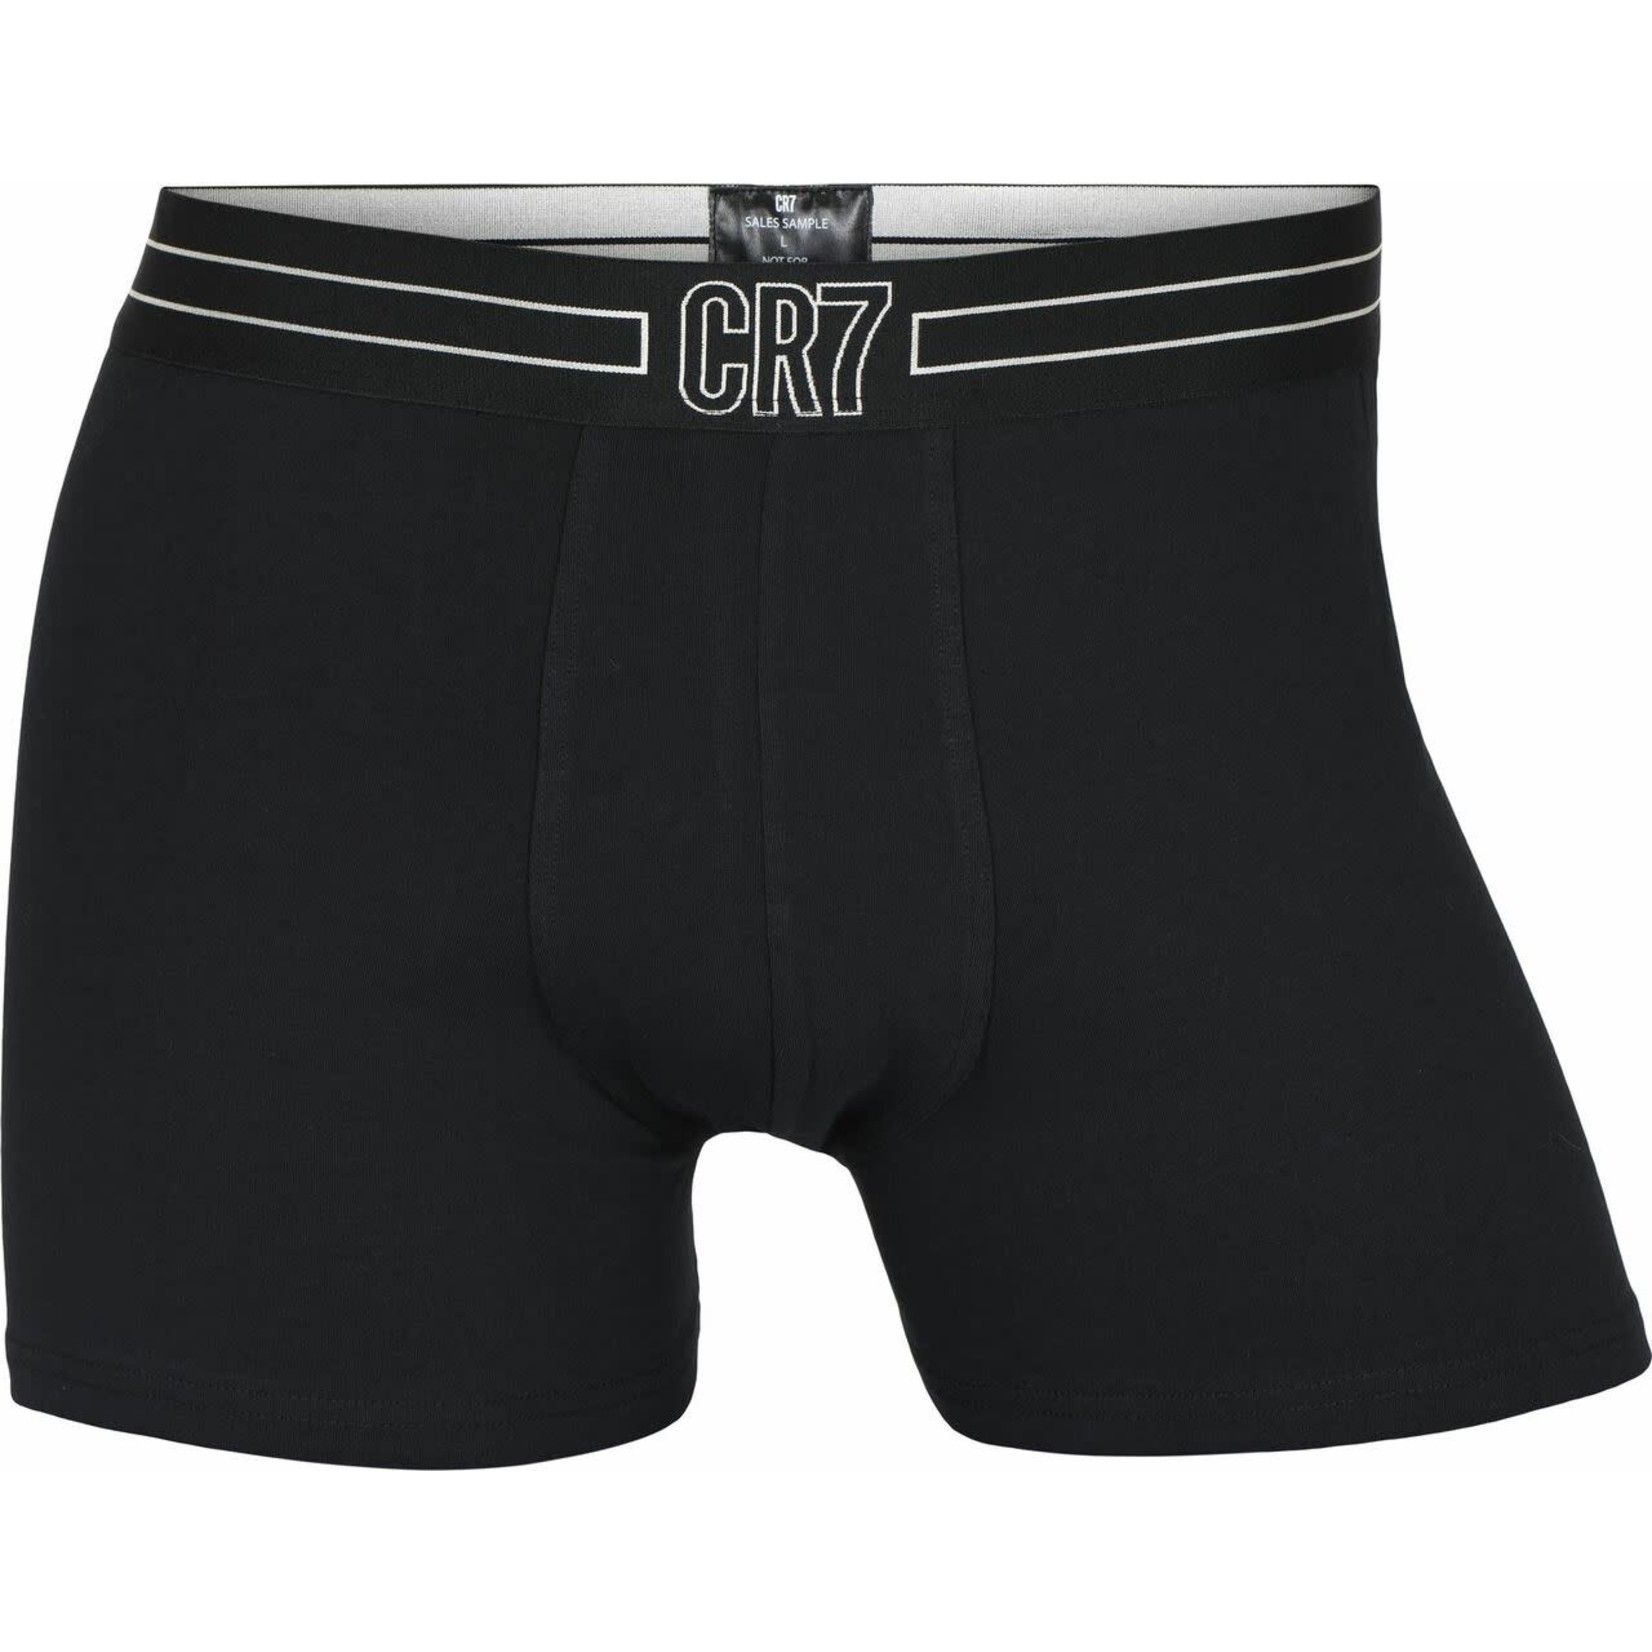 CR7 Boxer Underwear Fashion 3-Pack - Black Adult